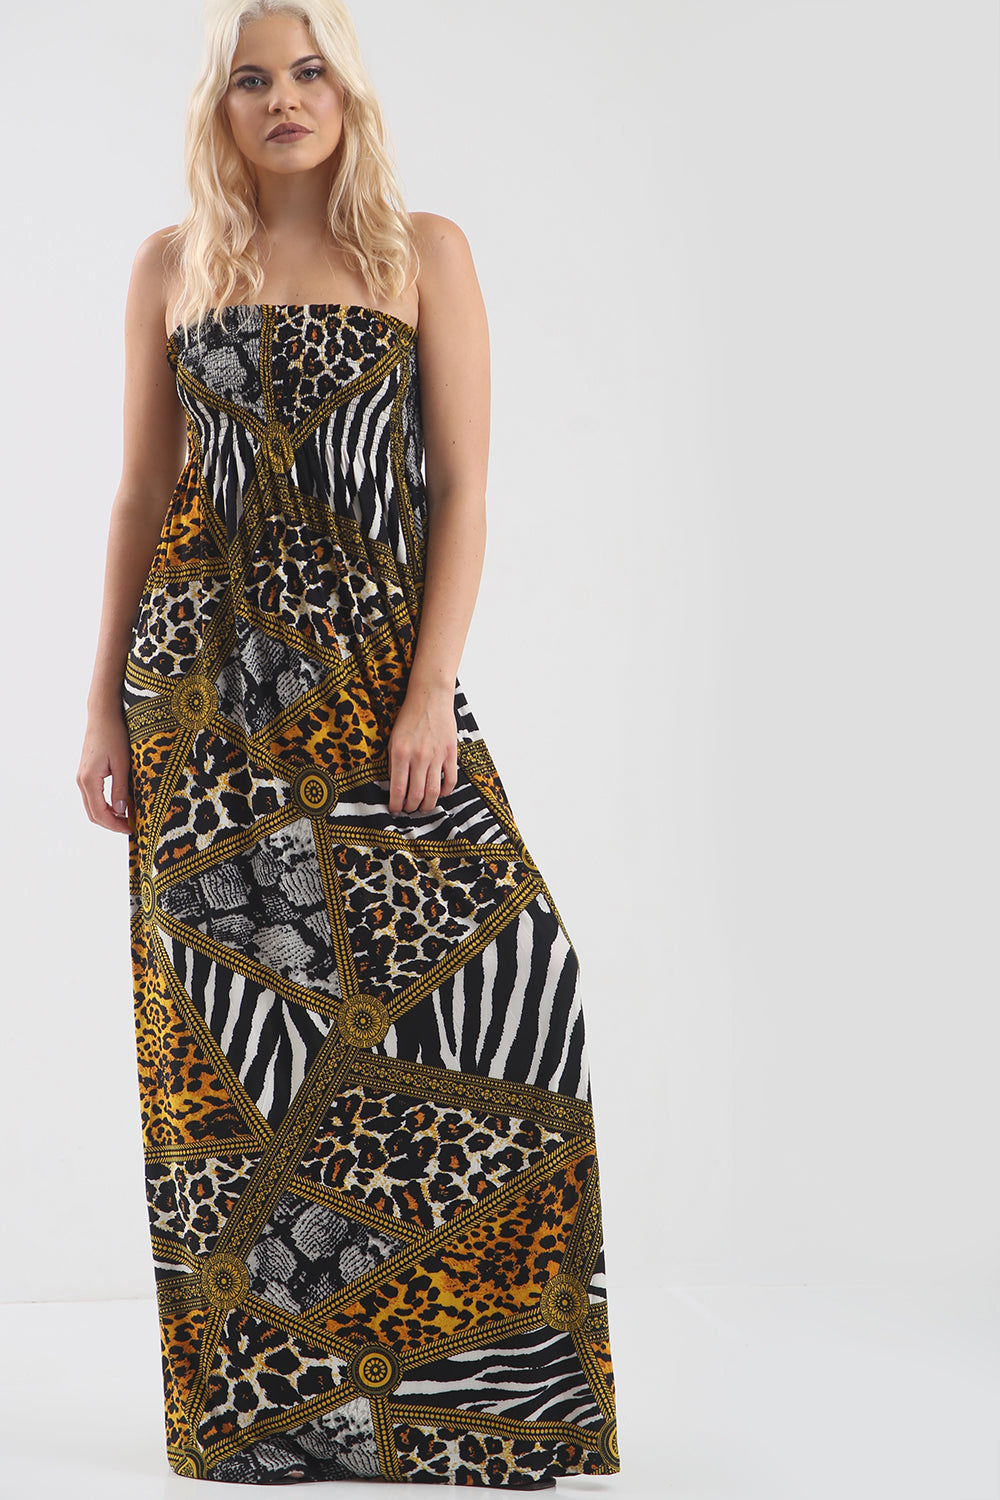 Animal Print Strapless Shirring Maxi Dress - bejealous-com